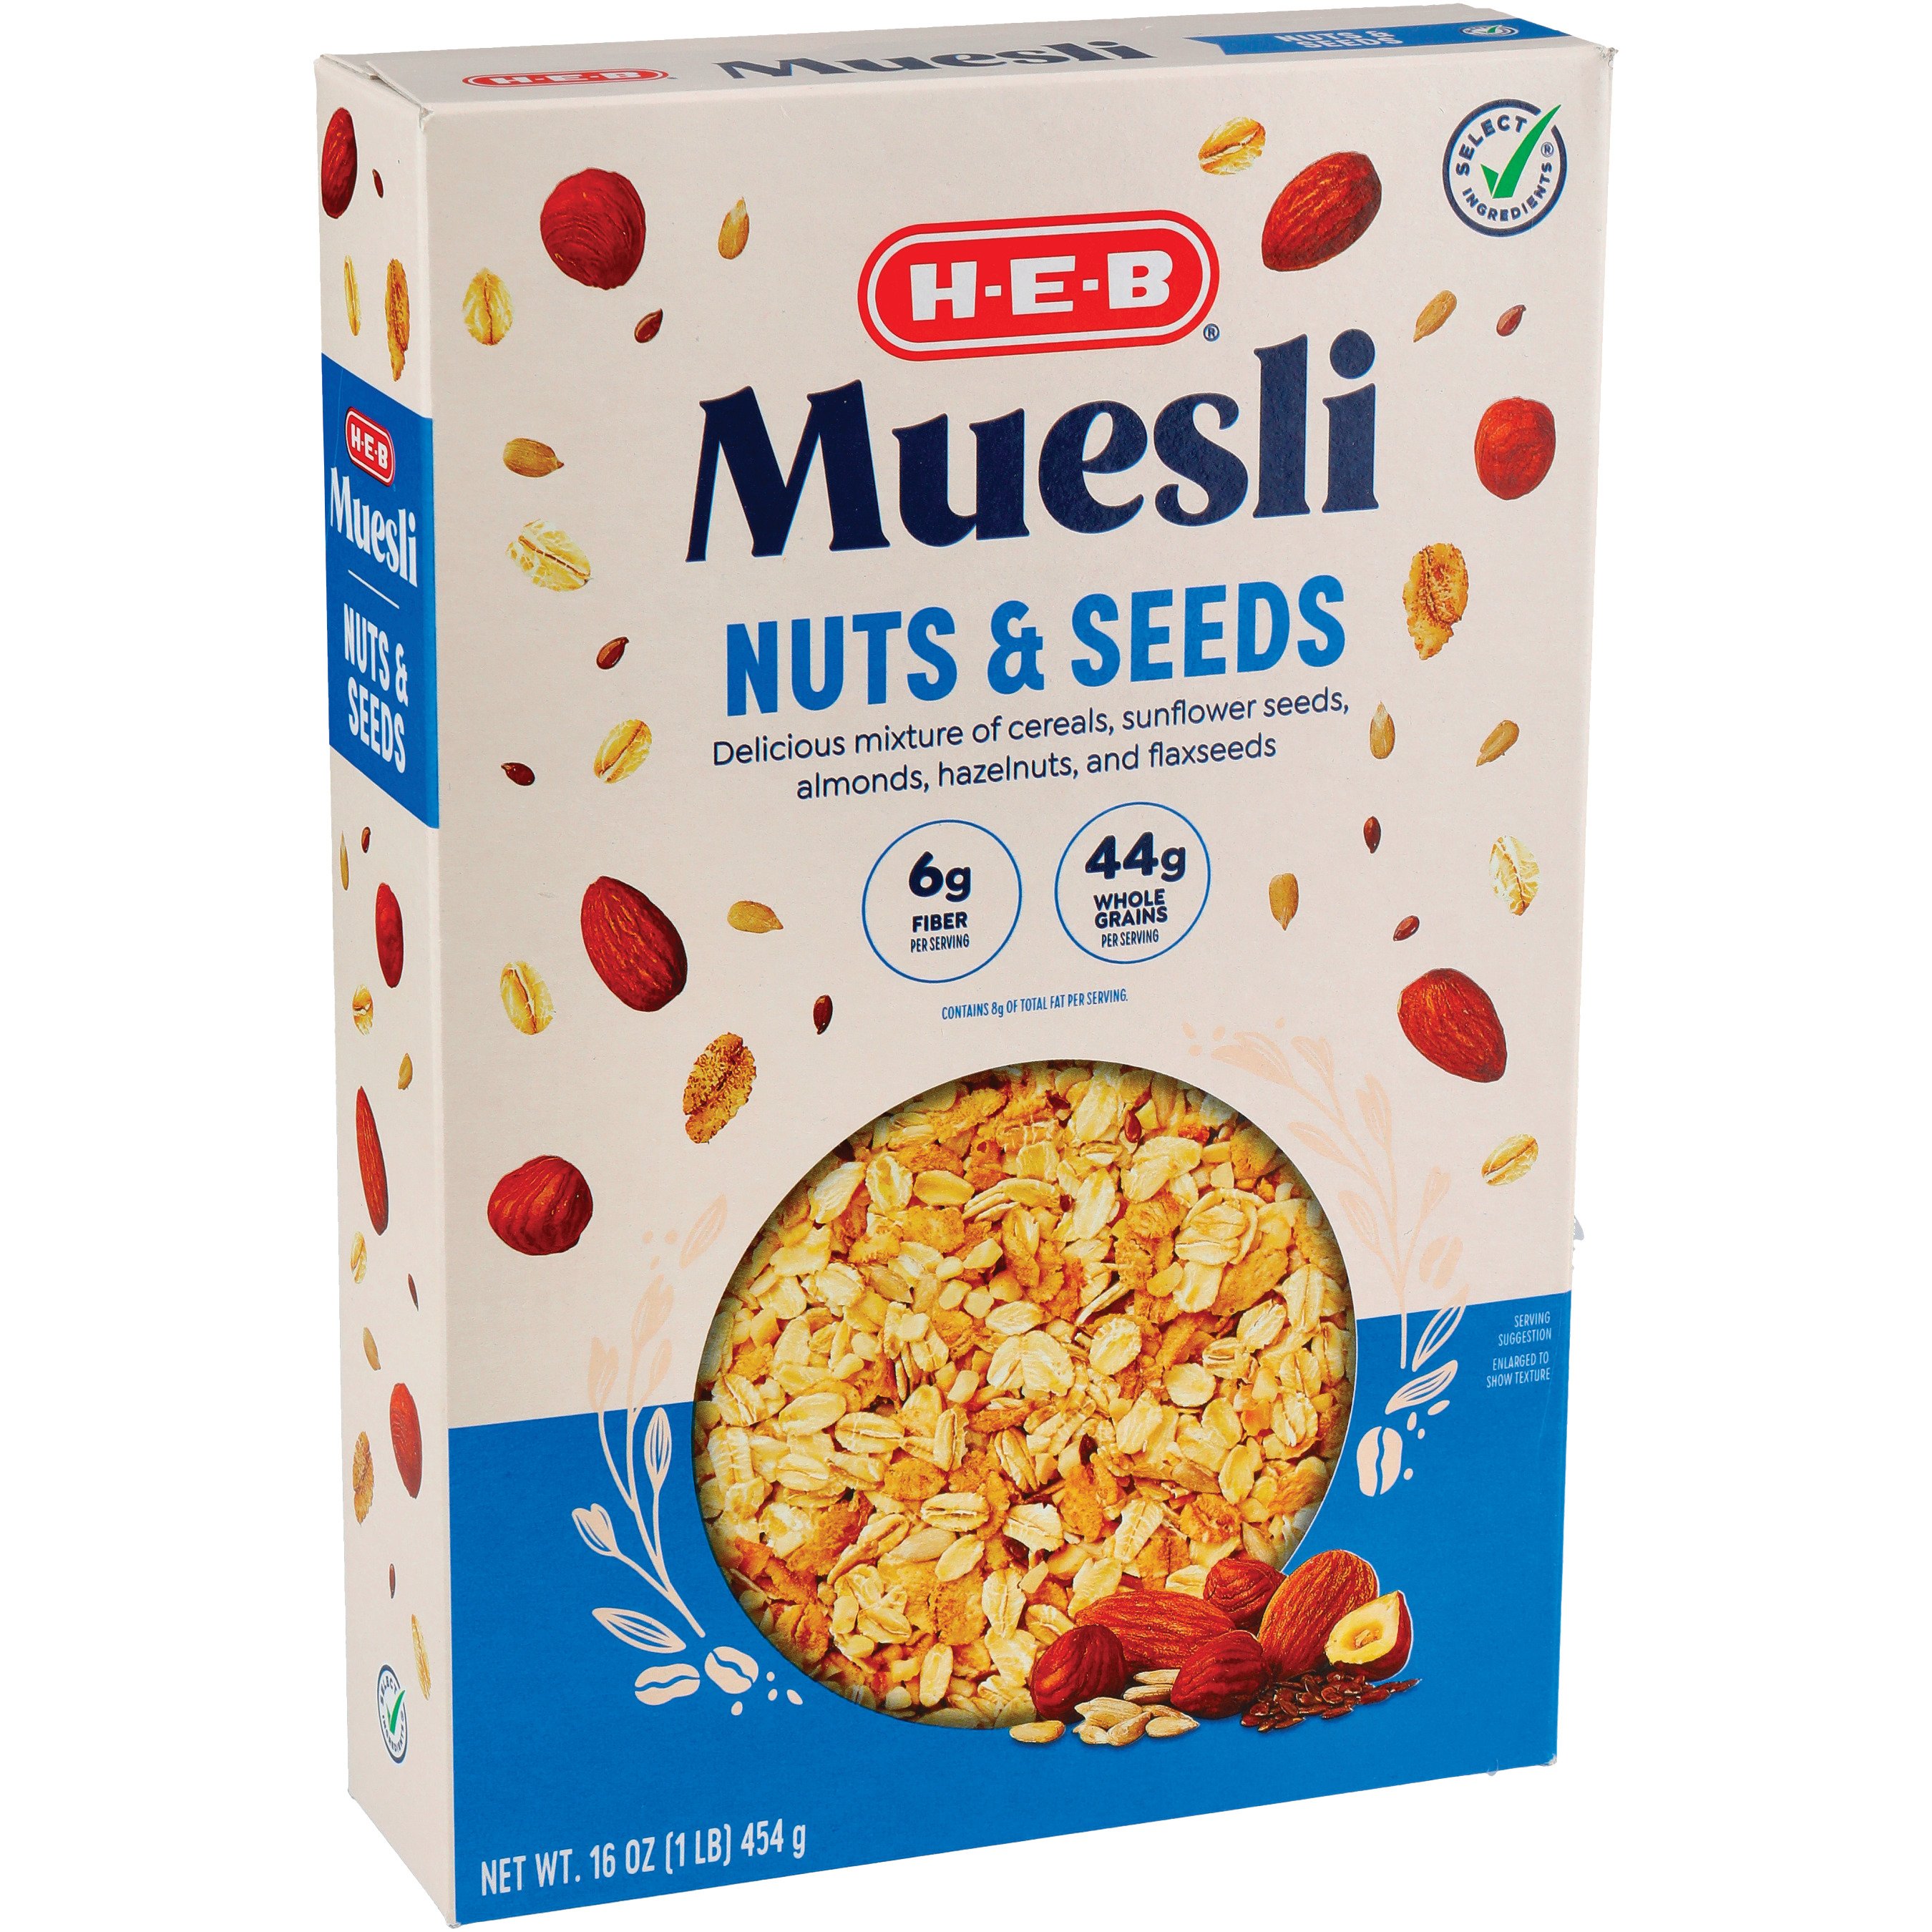 H-E-B Nuts & Seeds Muesli